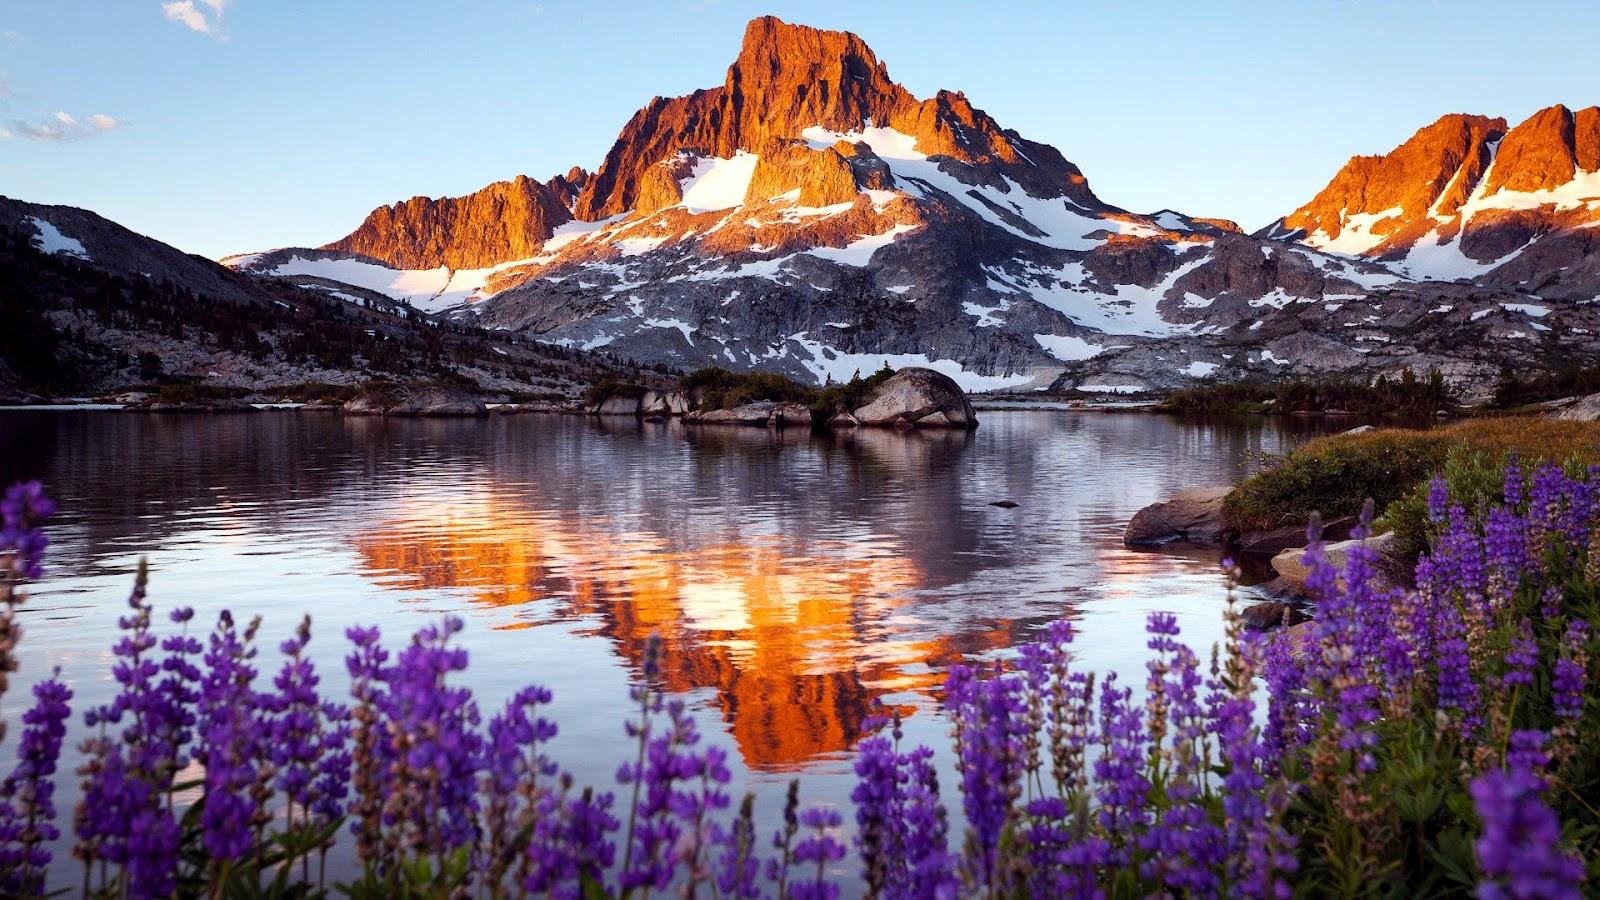 Mountain, Rock, Lake, Flowers